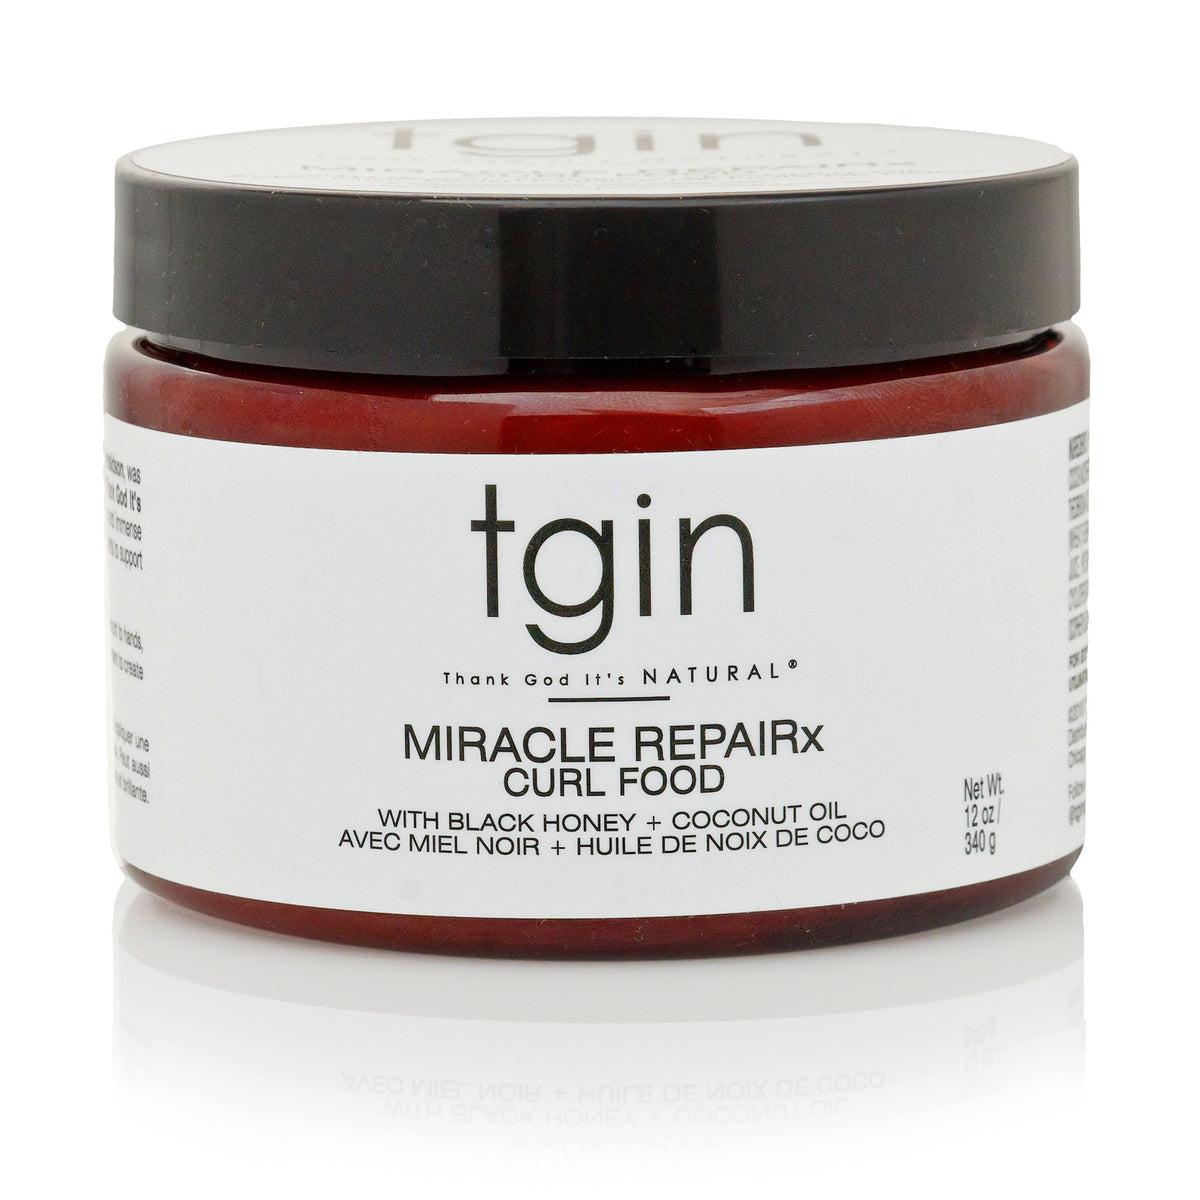 TGIN - Miracle RepaiRx Curl Food Daily Moisturizer